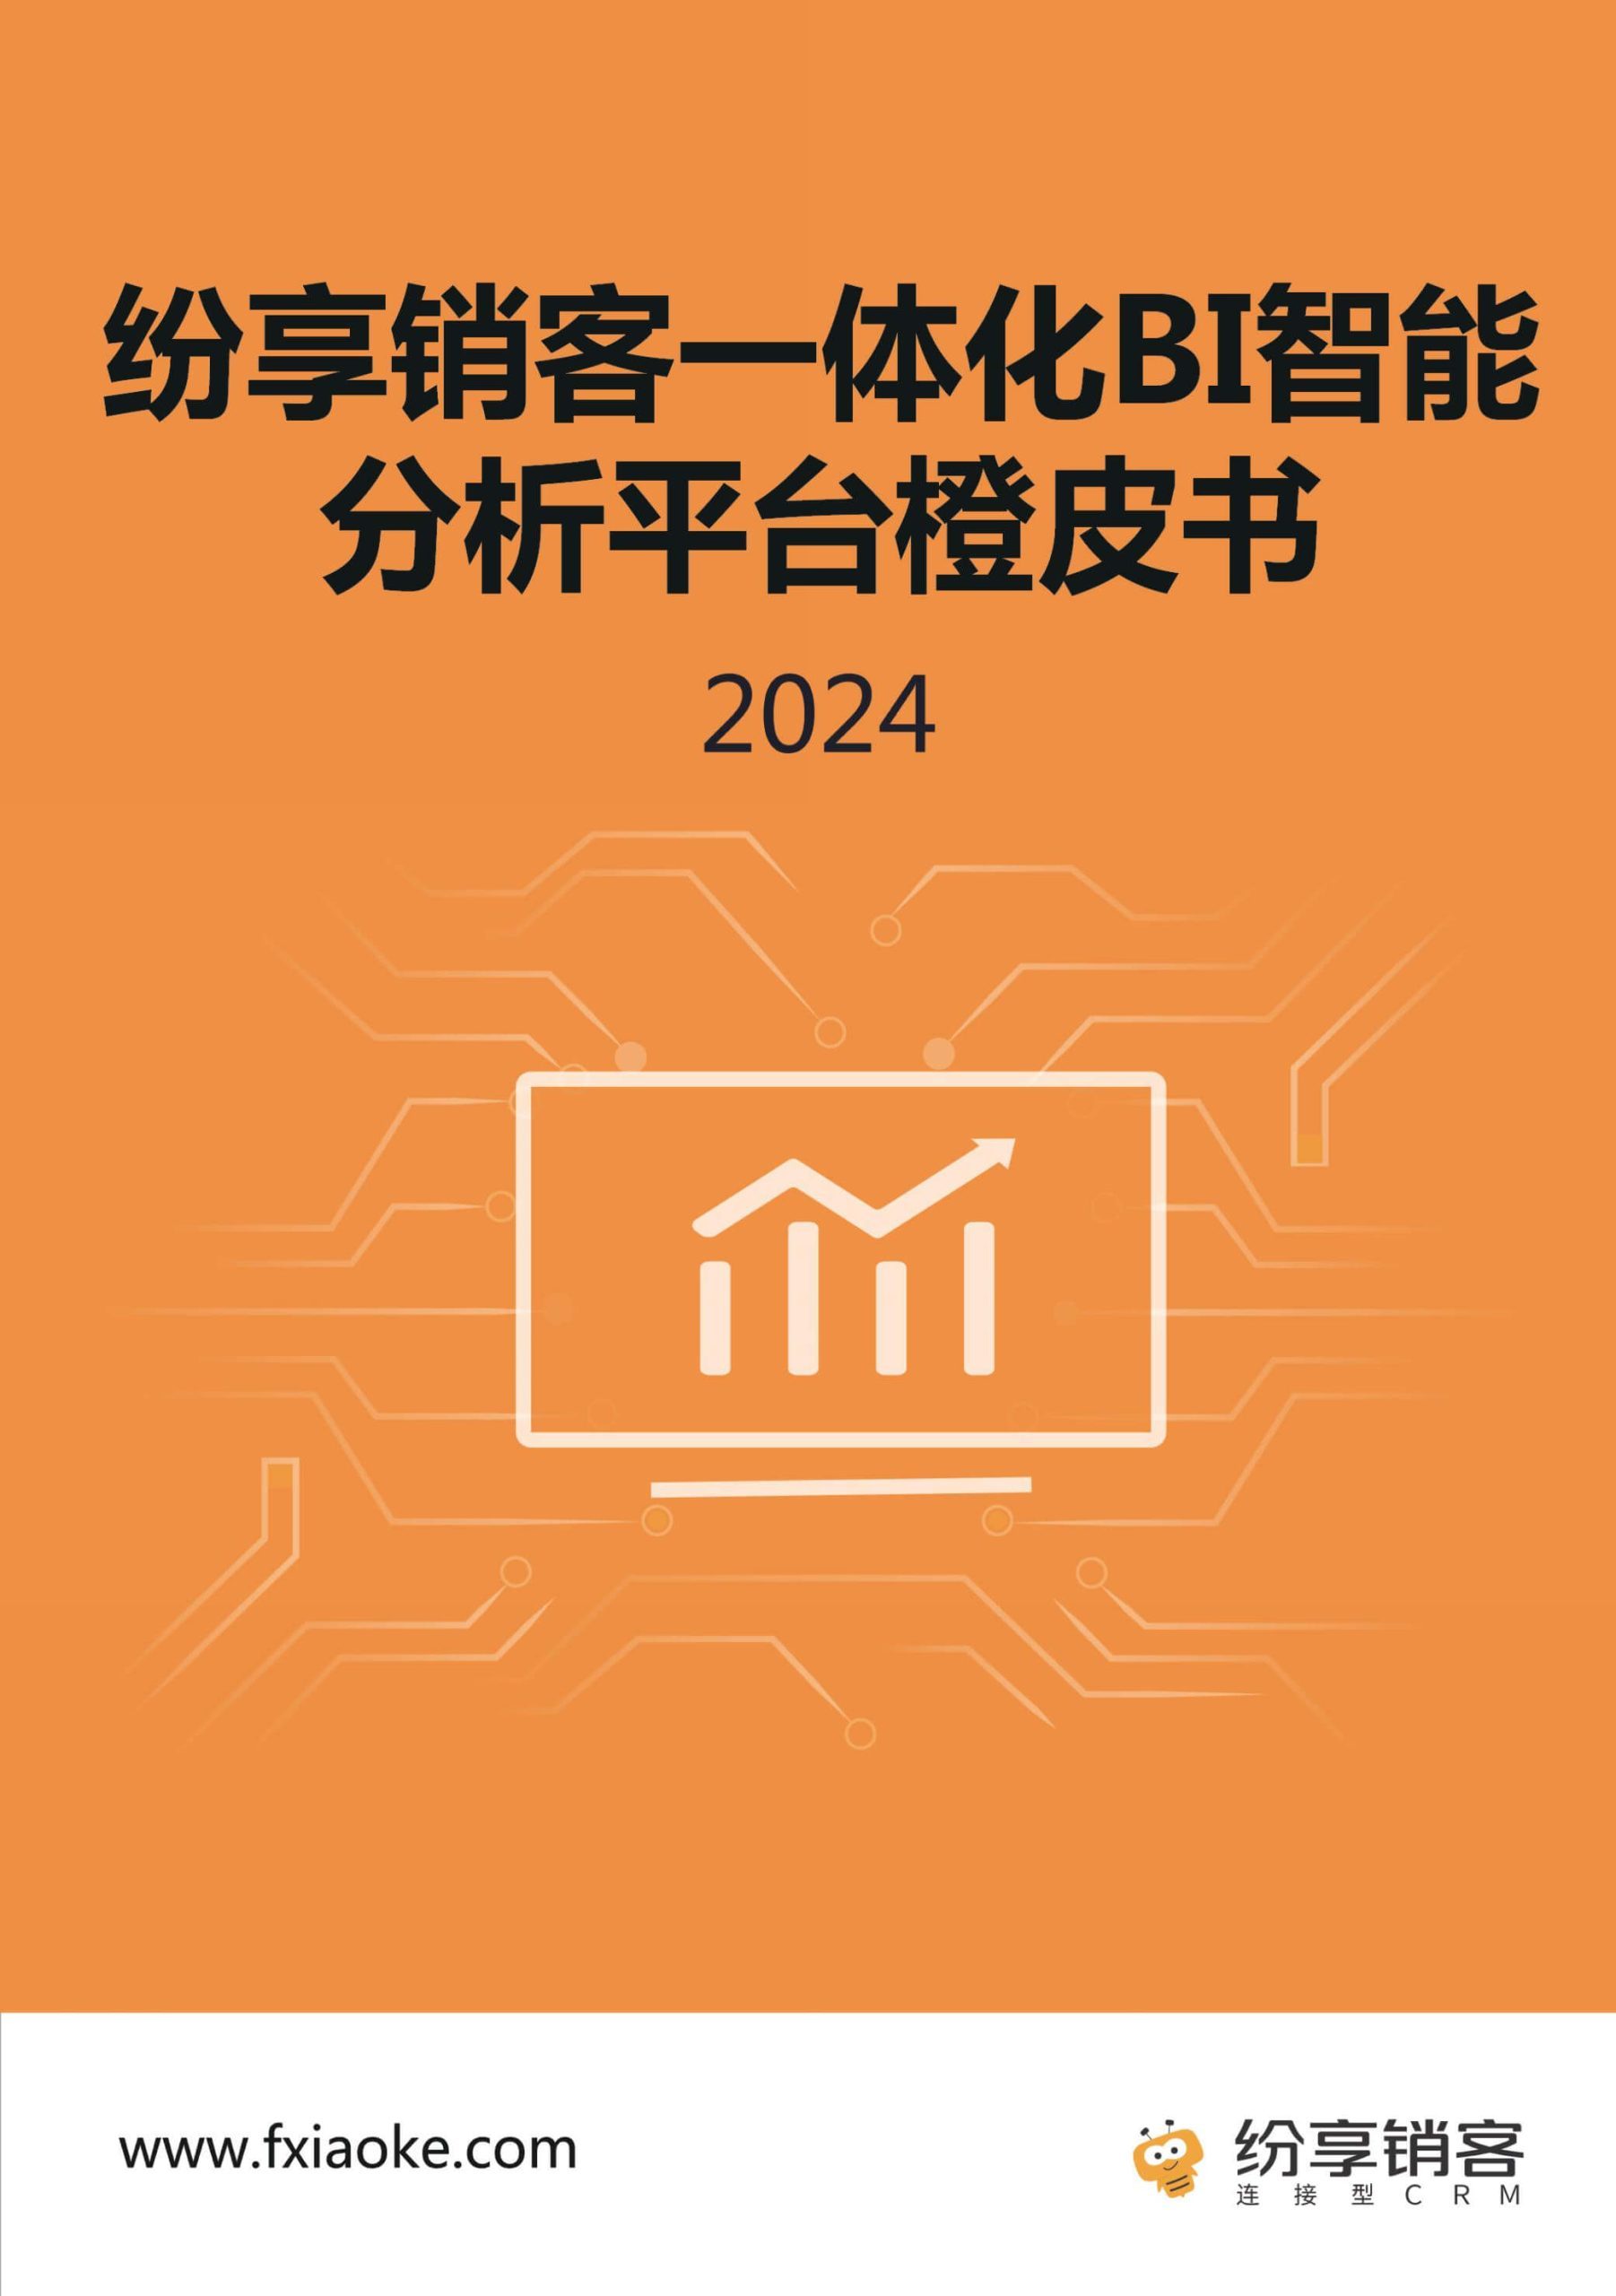 BI智能分析平台橙皮书2024版